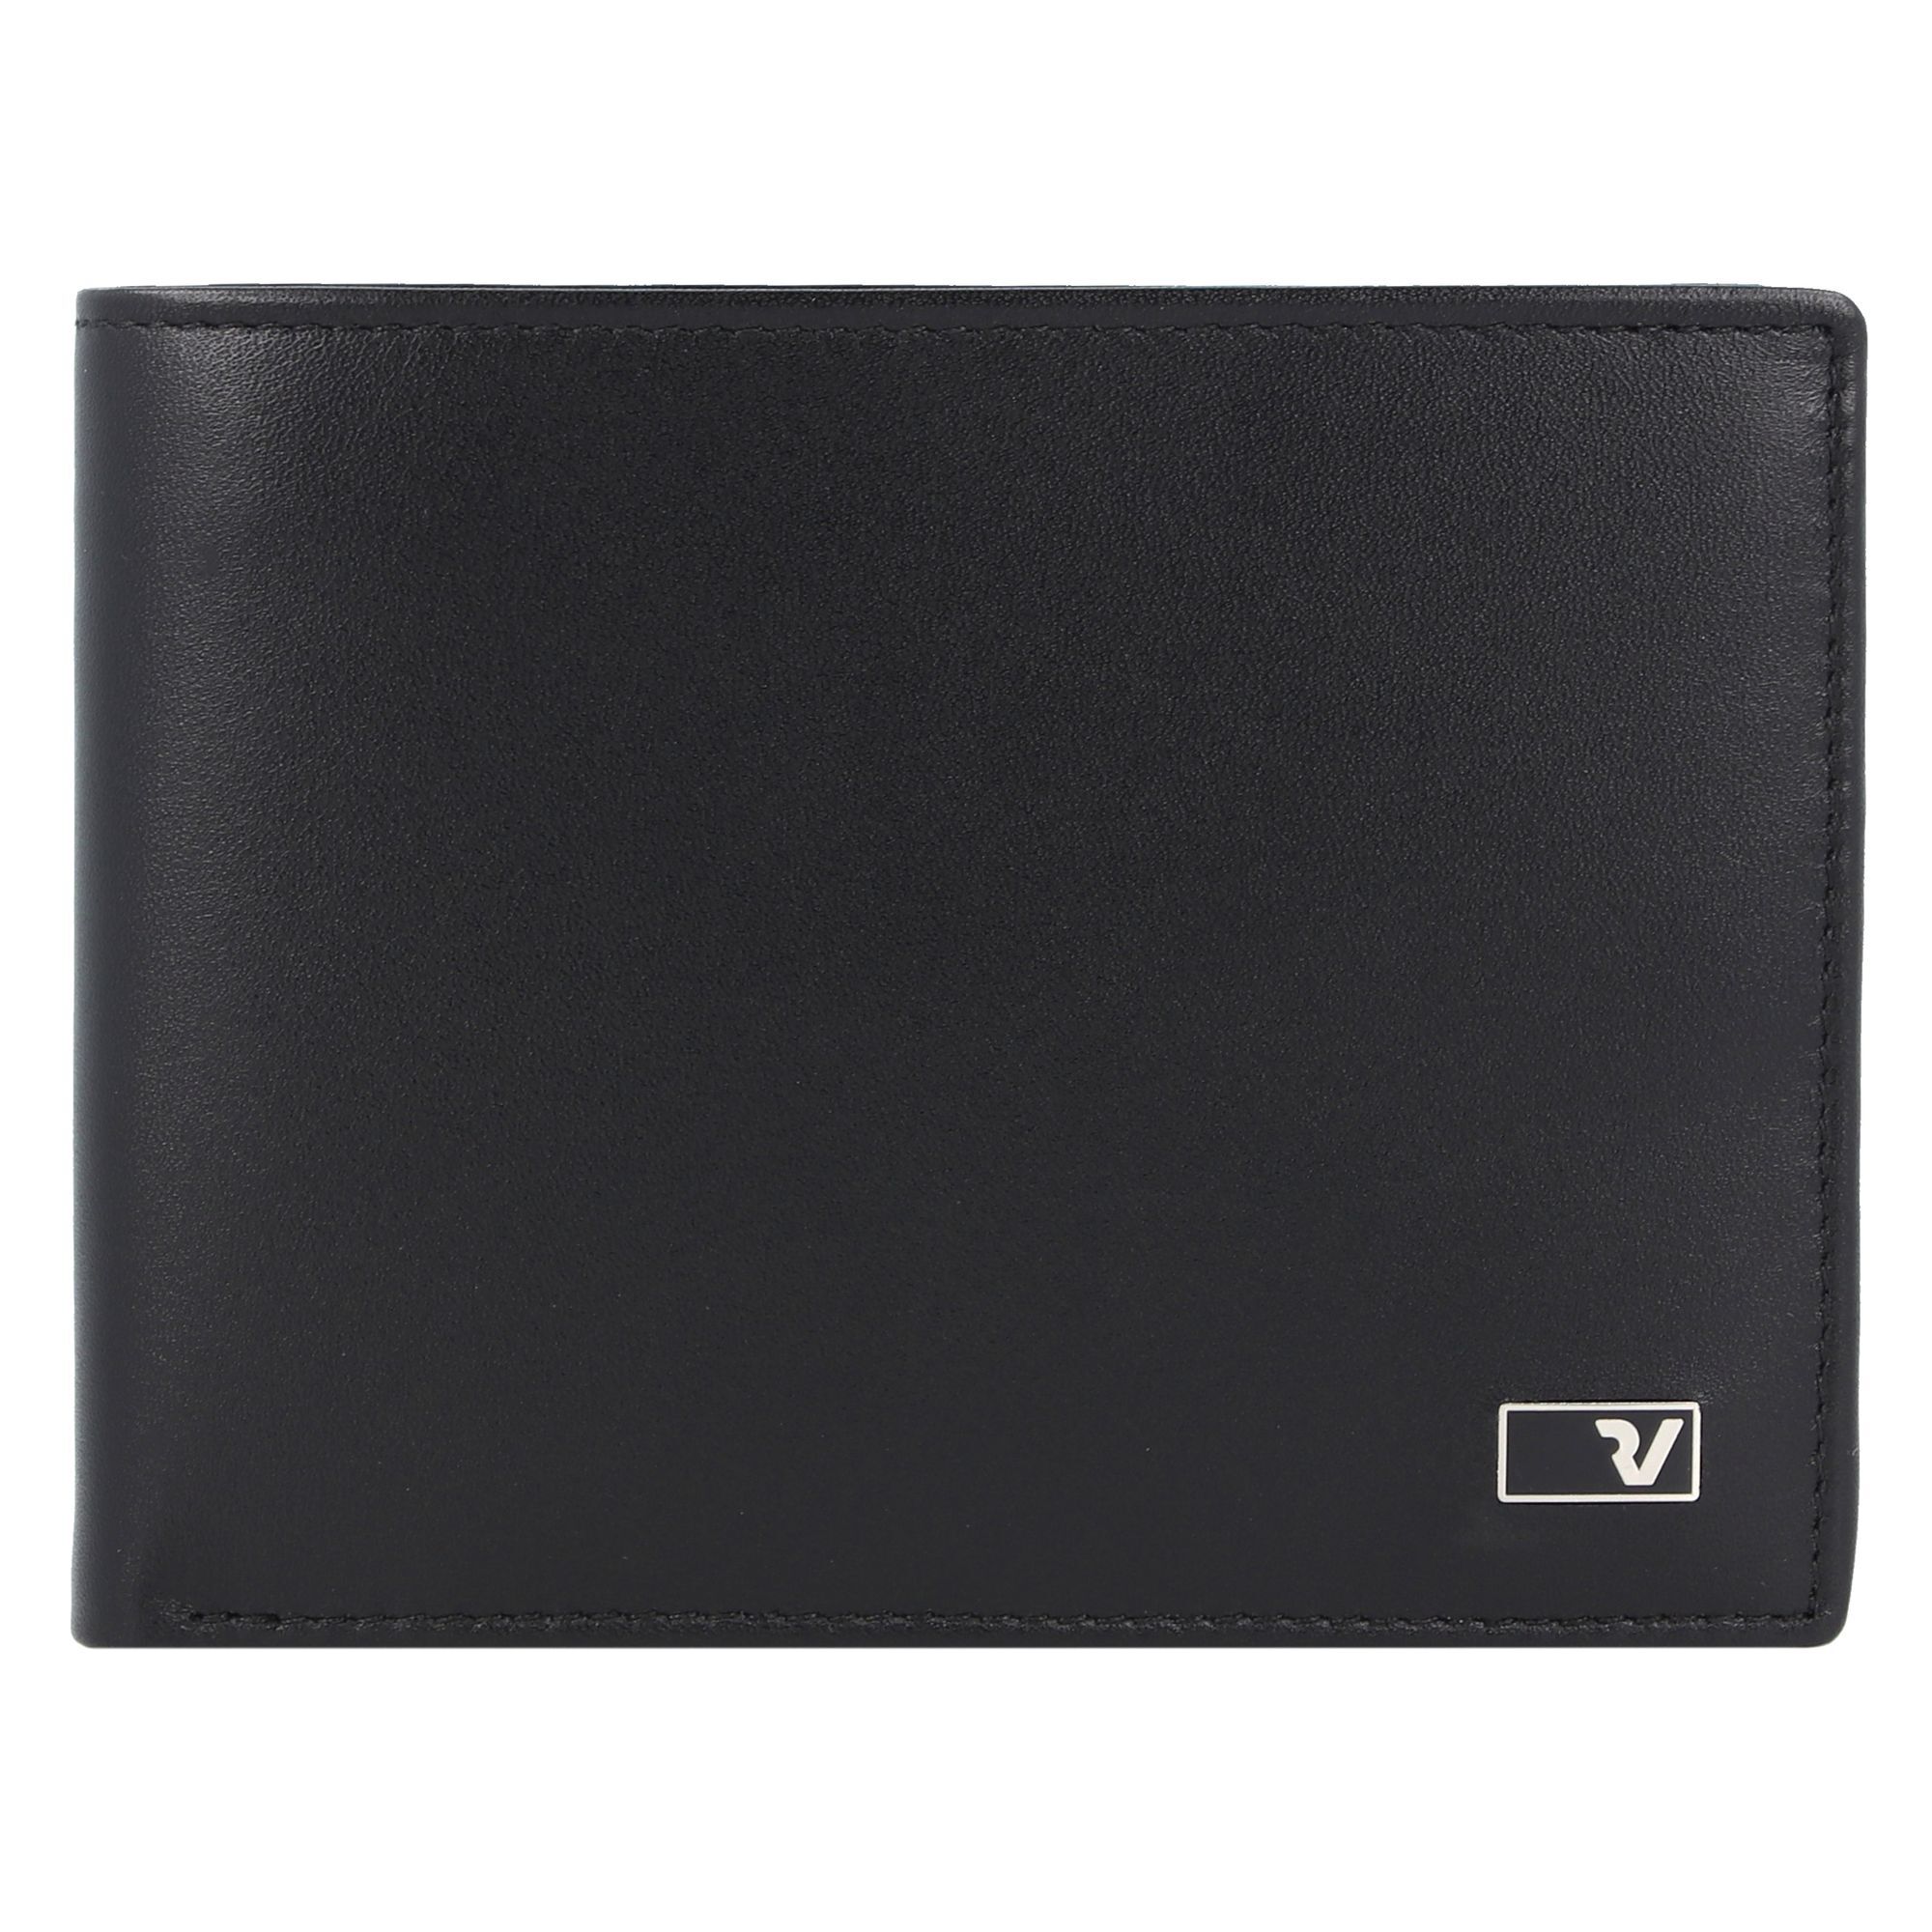 Кошелек Roncato Firenze RFID Leder 12 см, черный кошелек roncato firenze rfid leder 18 см темно синий